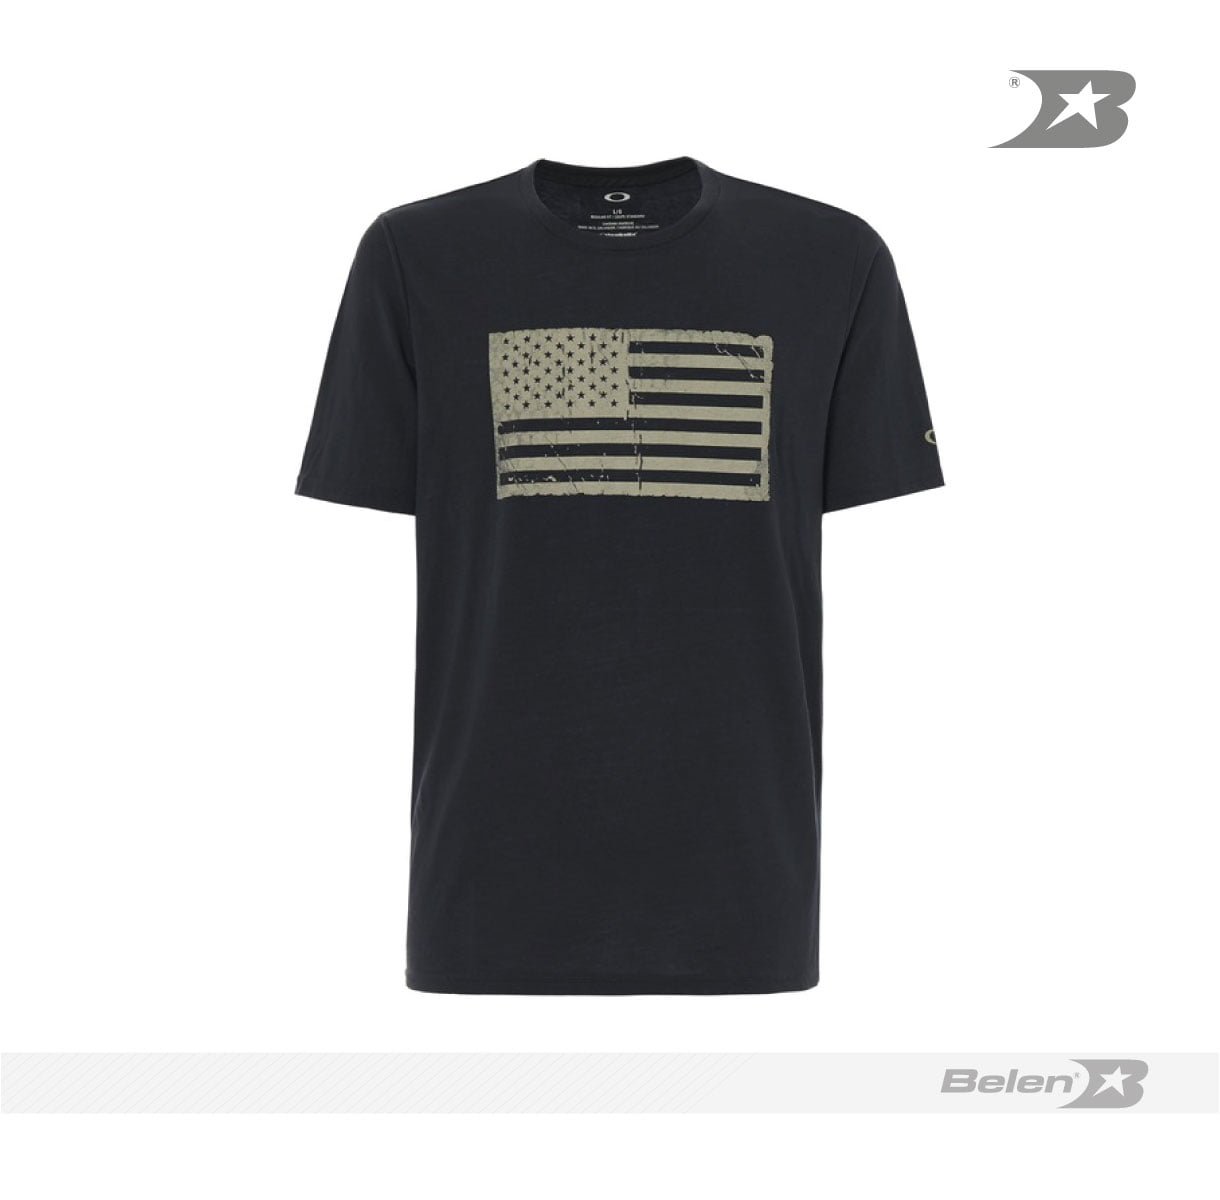 Camiseta oakley SC-mil flag - Tienda militar - Uniforme militar | Belén